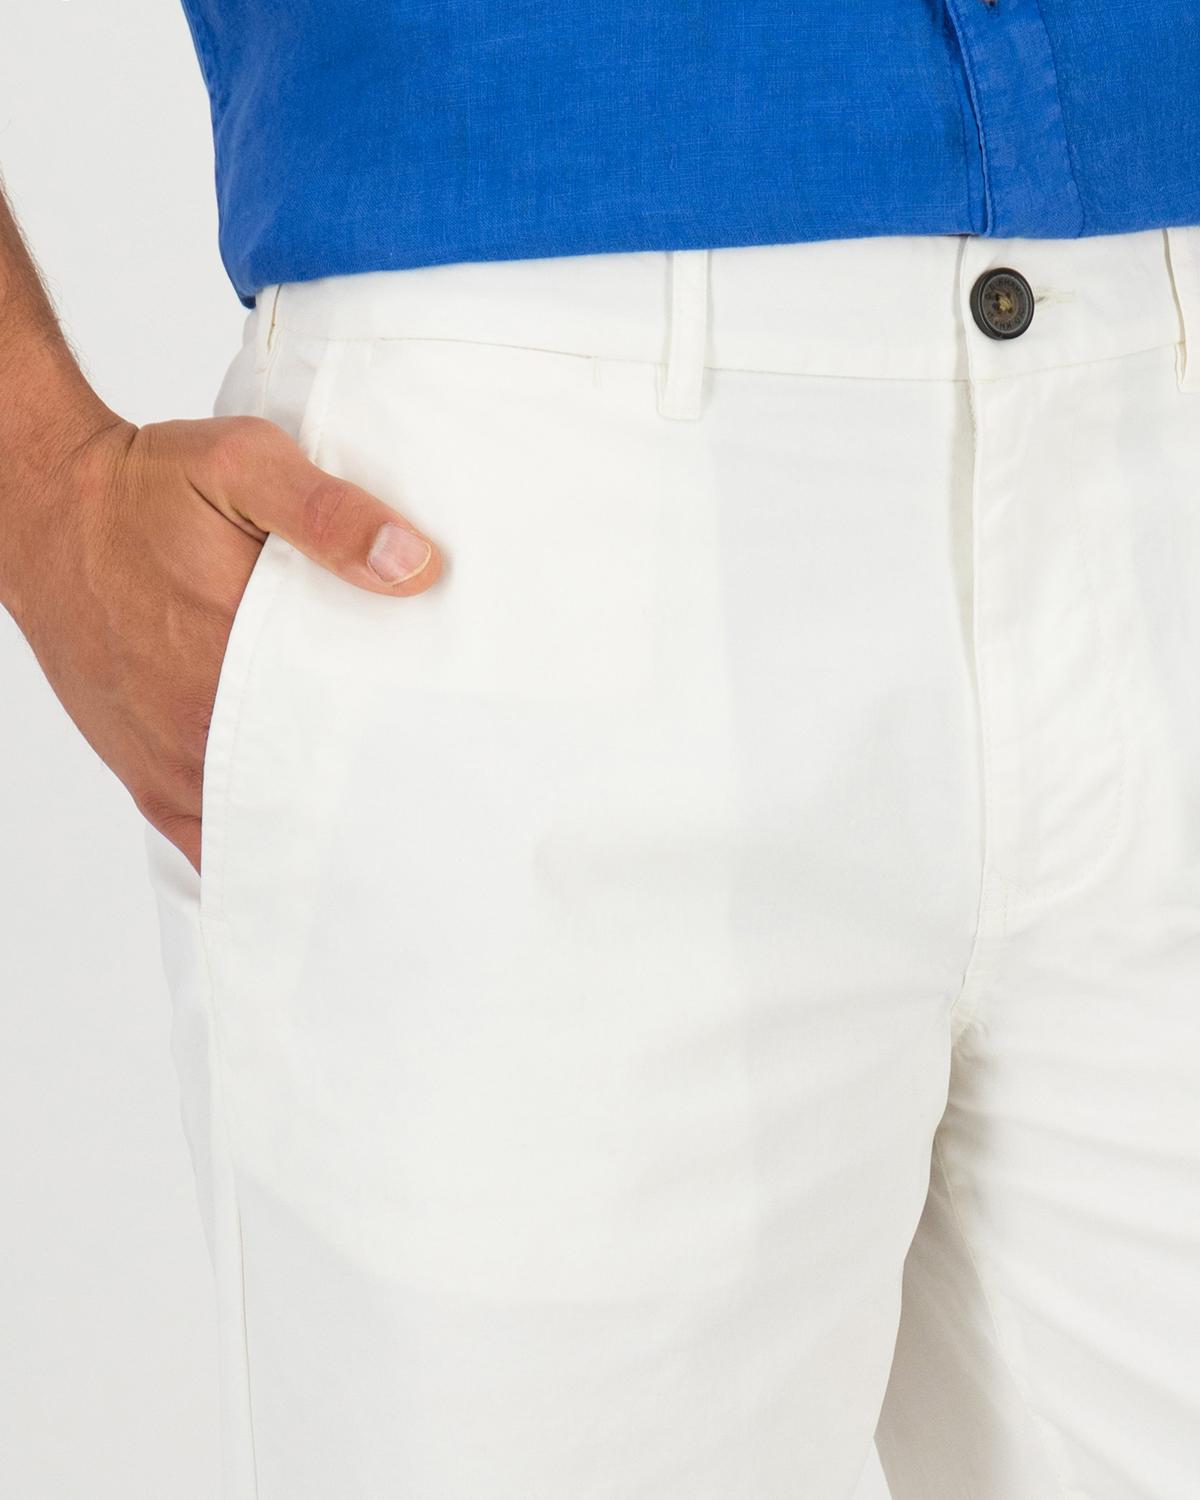 Men's Harvey Shorts  -  White